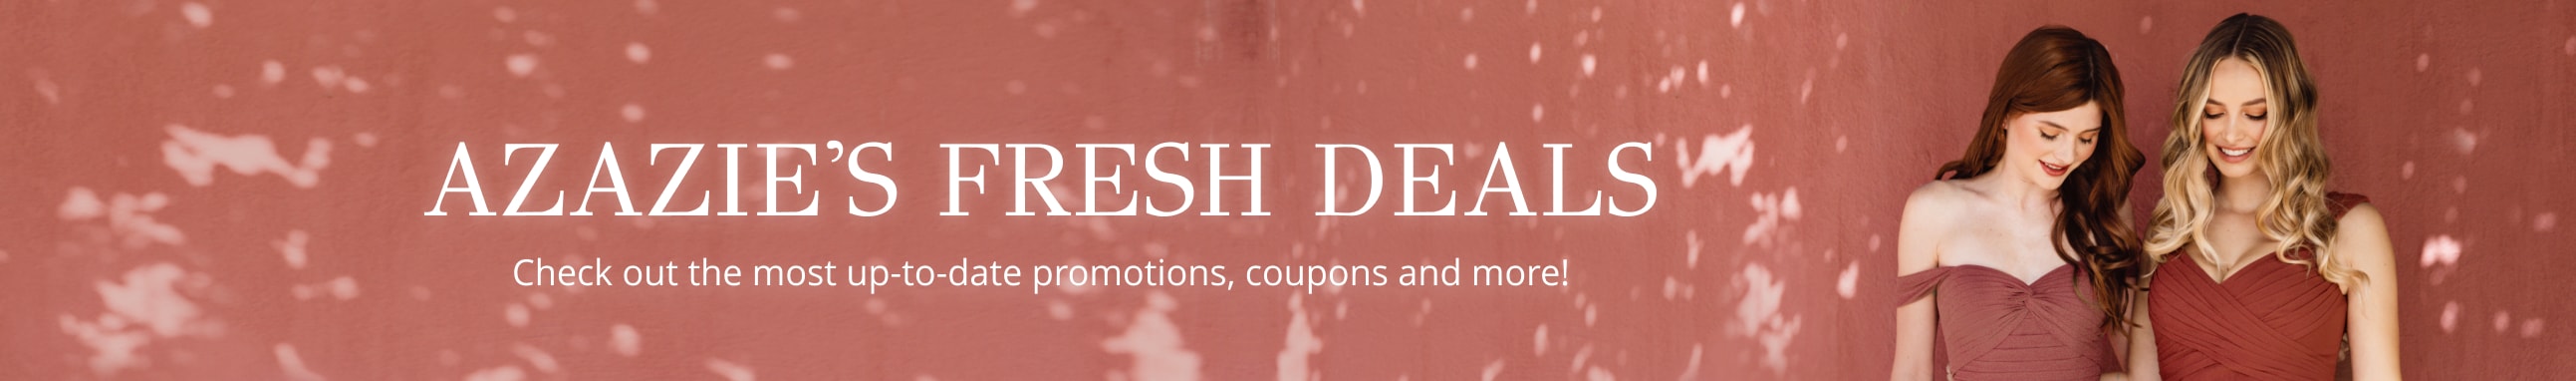 fresh deals